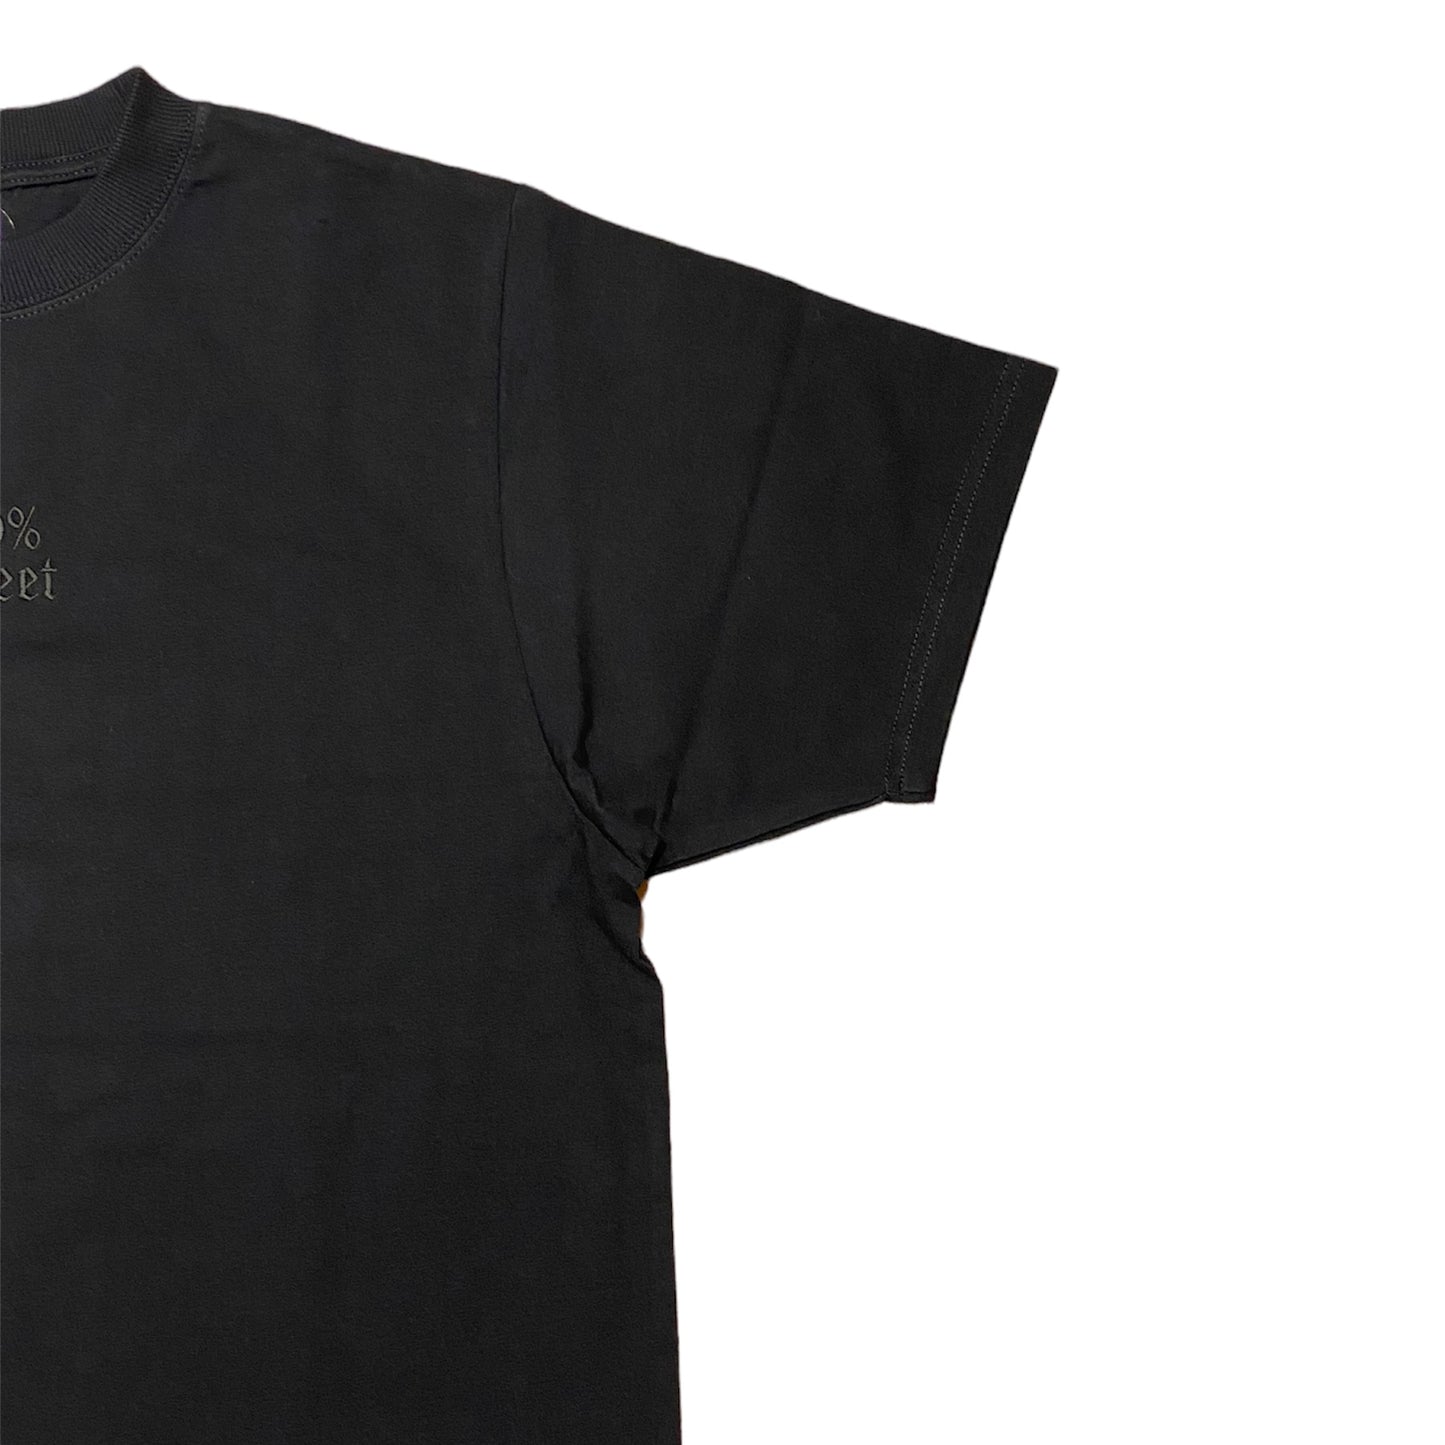 【UNION originals - ユニオンオリジナルス】100% Street Logo T-shirt / Black (Tシャツ/ブラック)